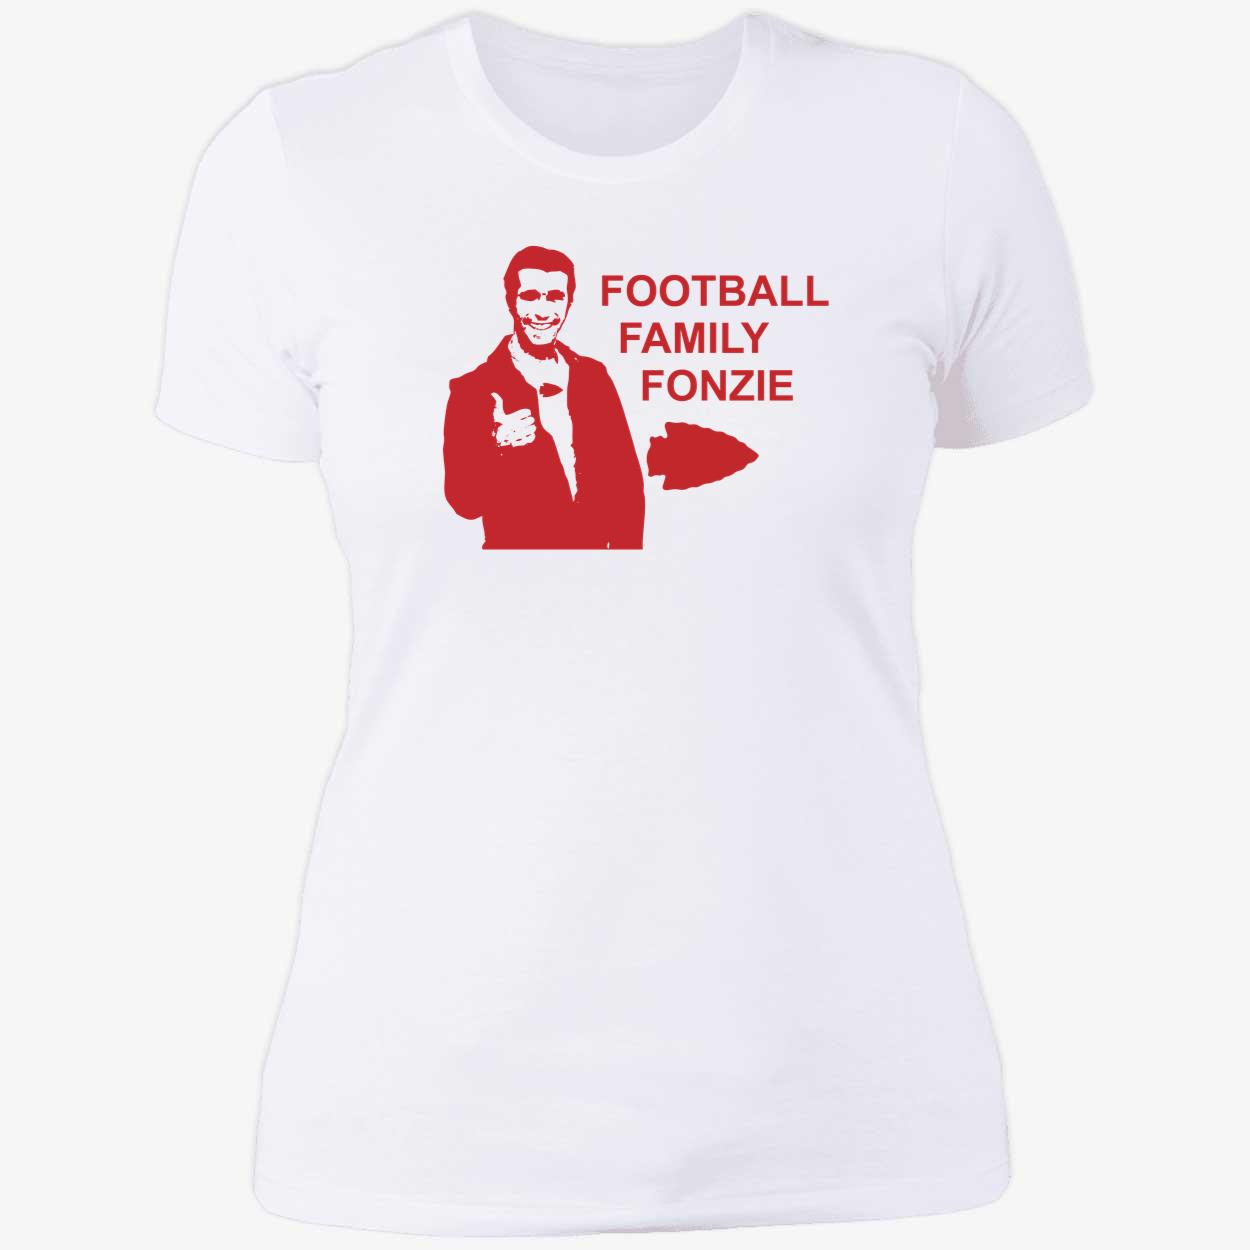 aaronladd0 Football Family Fonzie Ladies Boyfriend Shirt